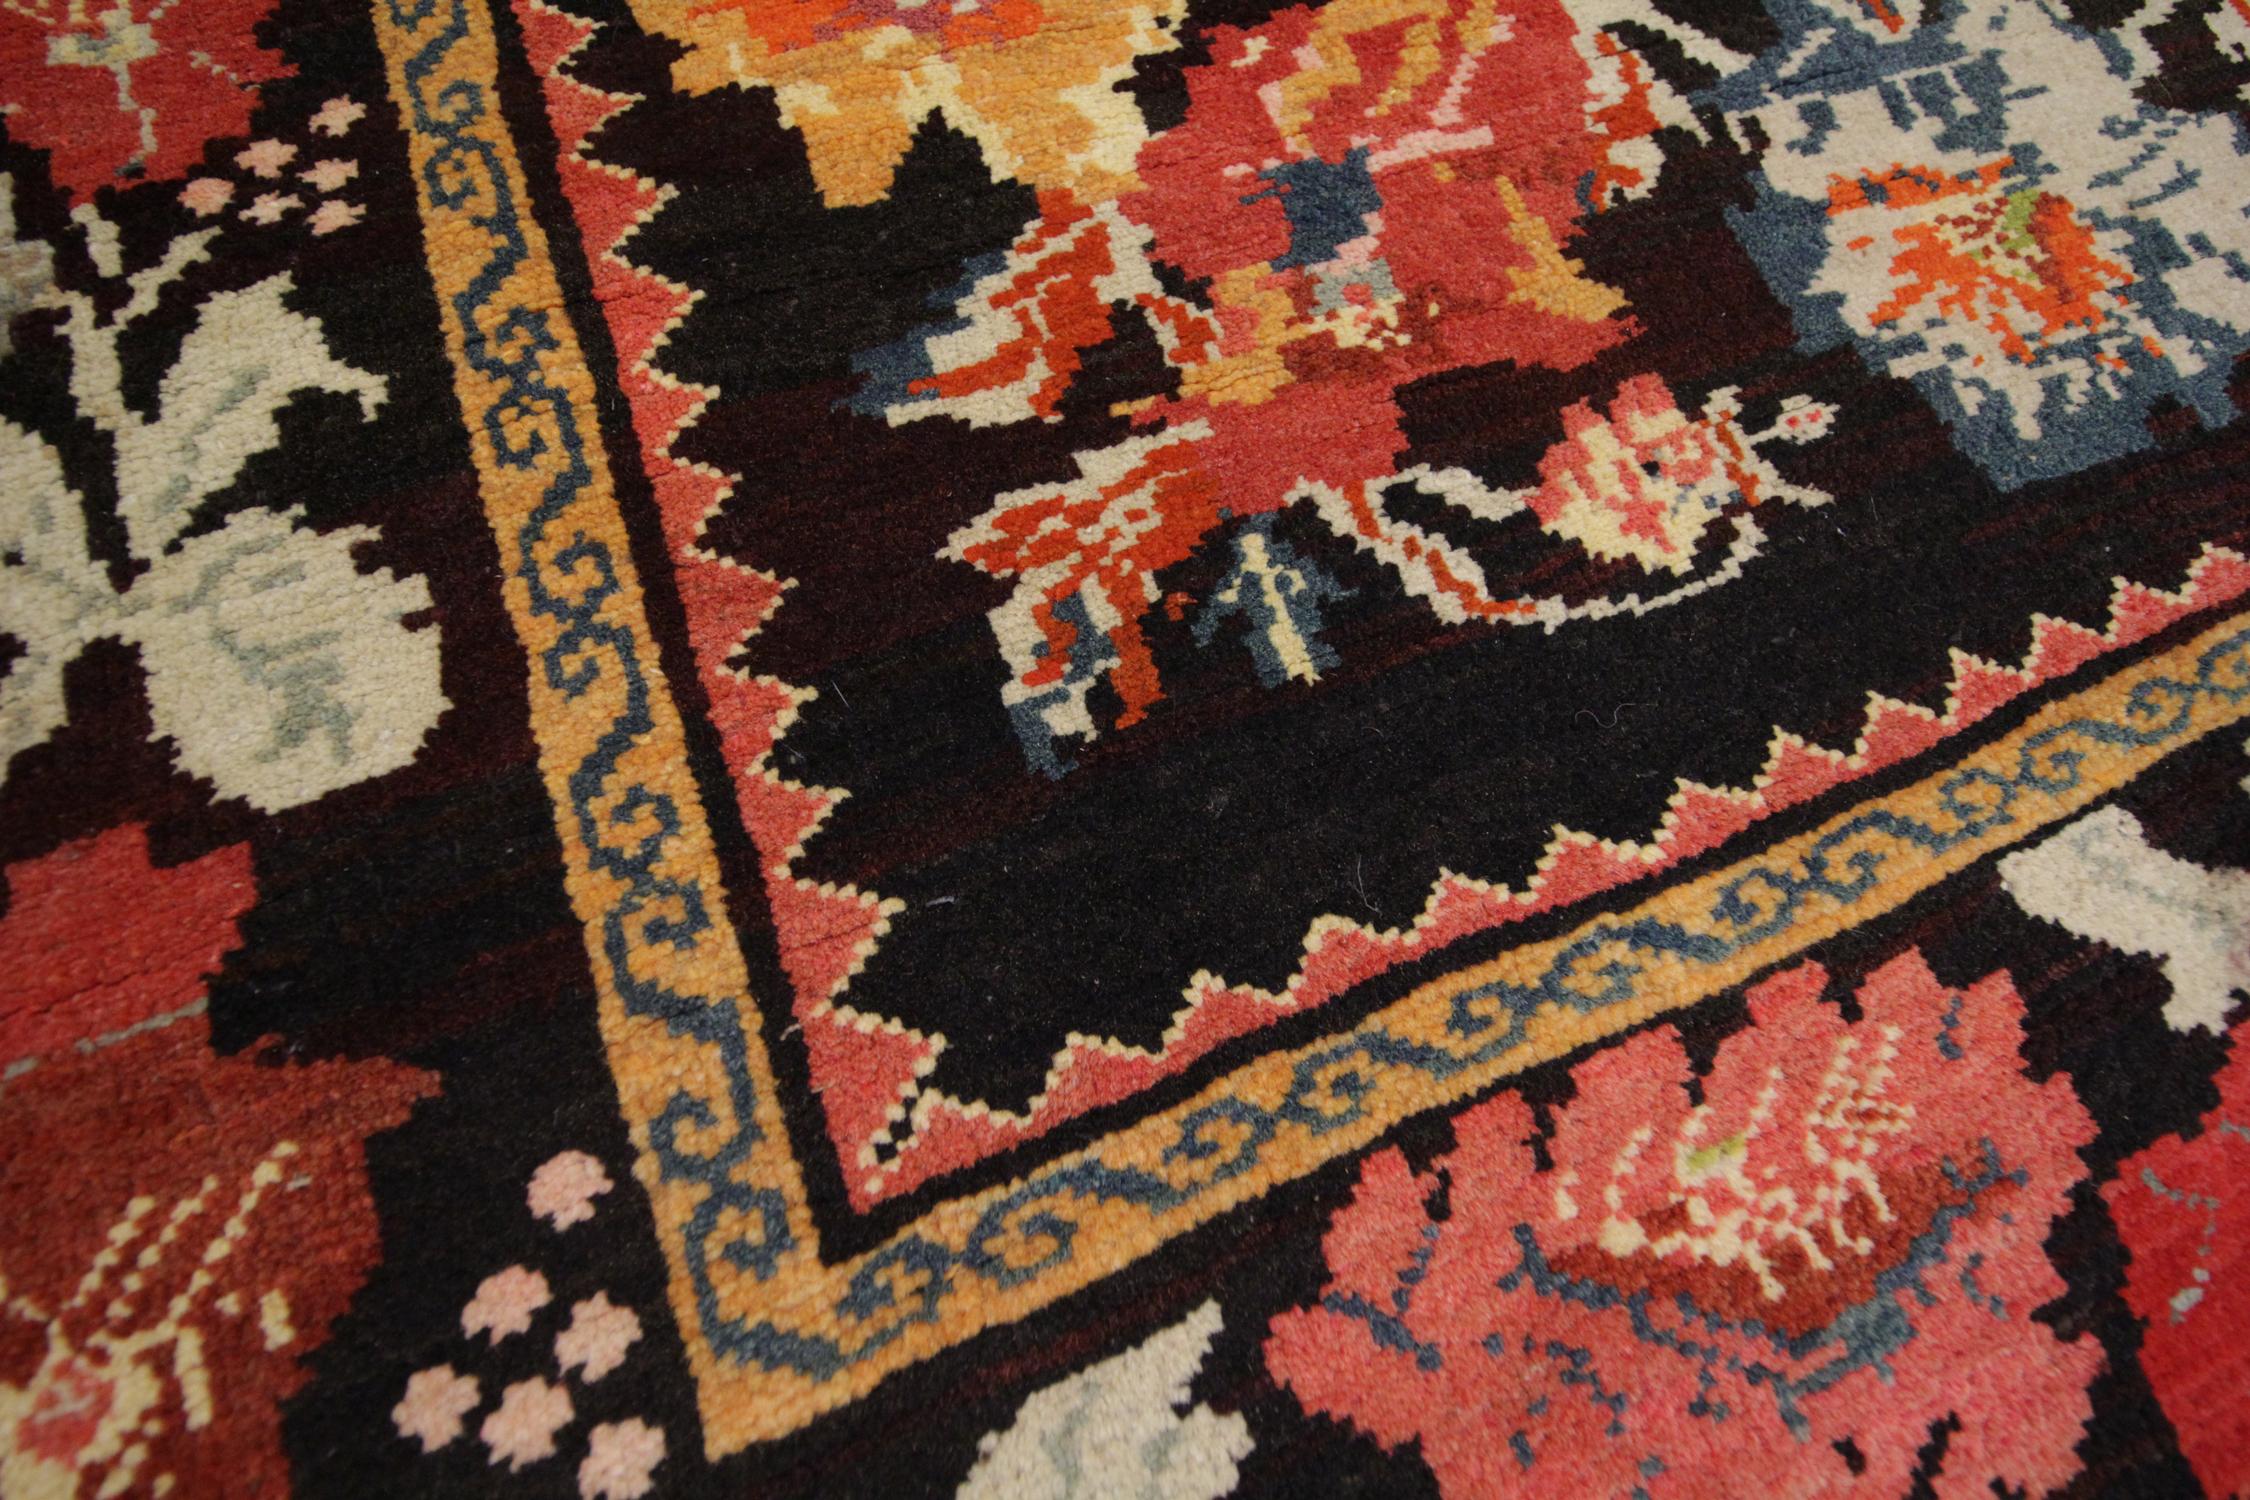 Persian Antique Caucasian Karabagh Handmade Carpet Oriental Rug, Floral Area Rugs CHR64 For Sale